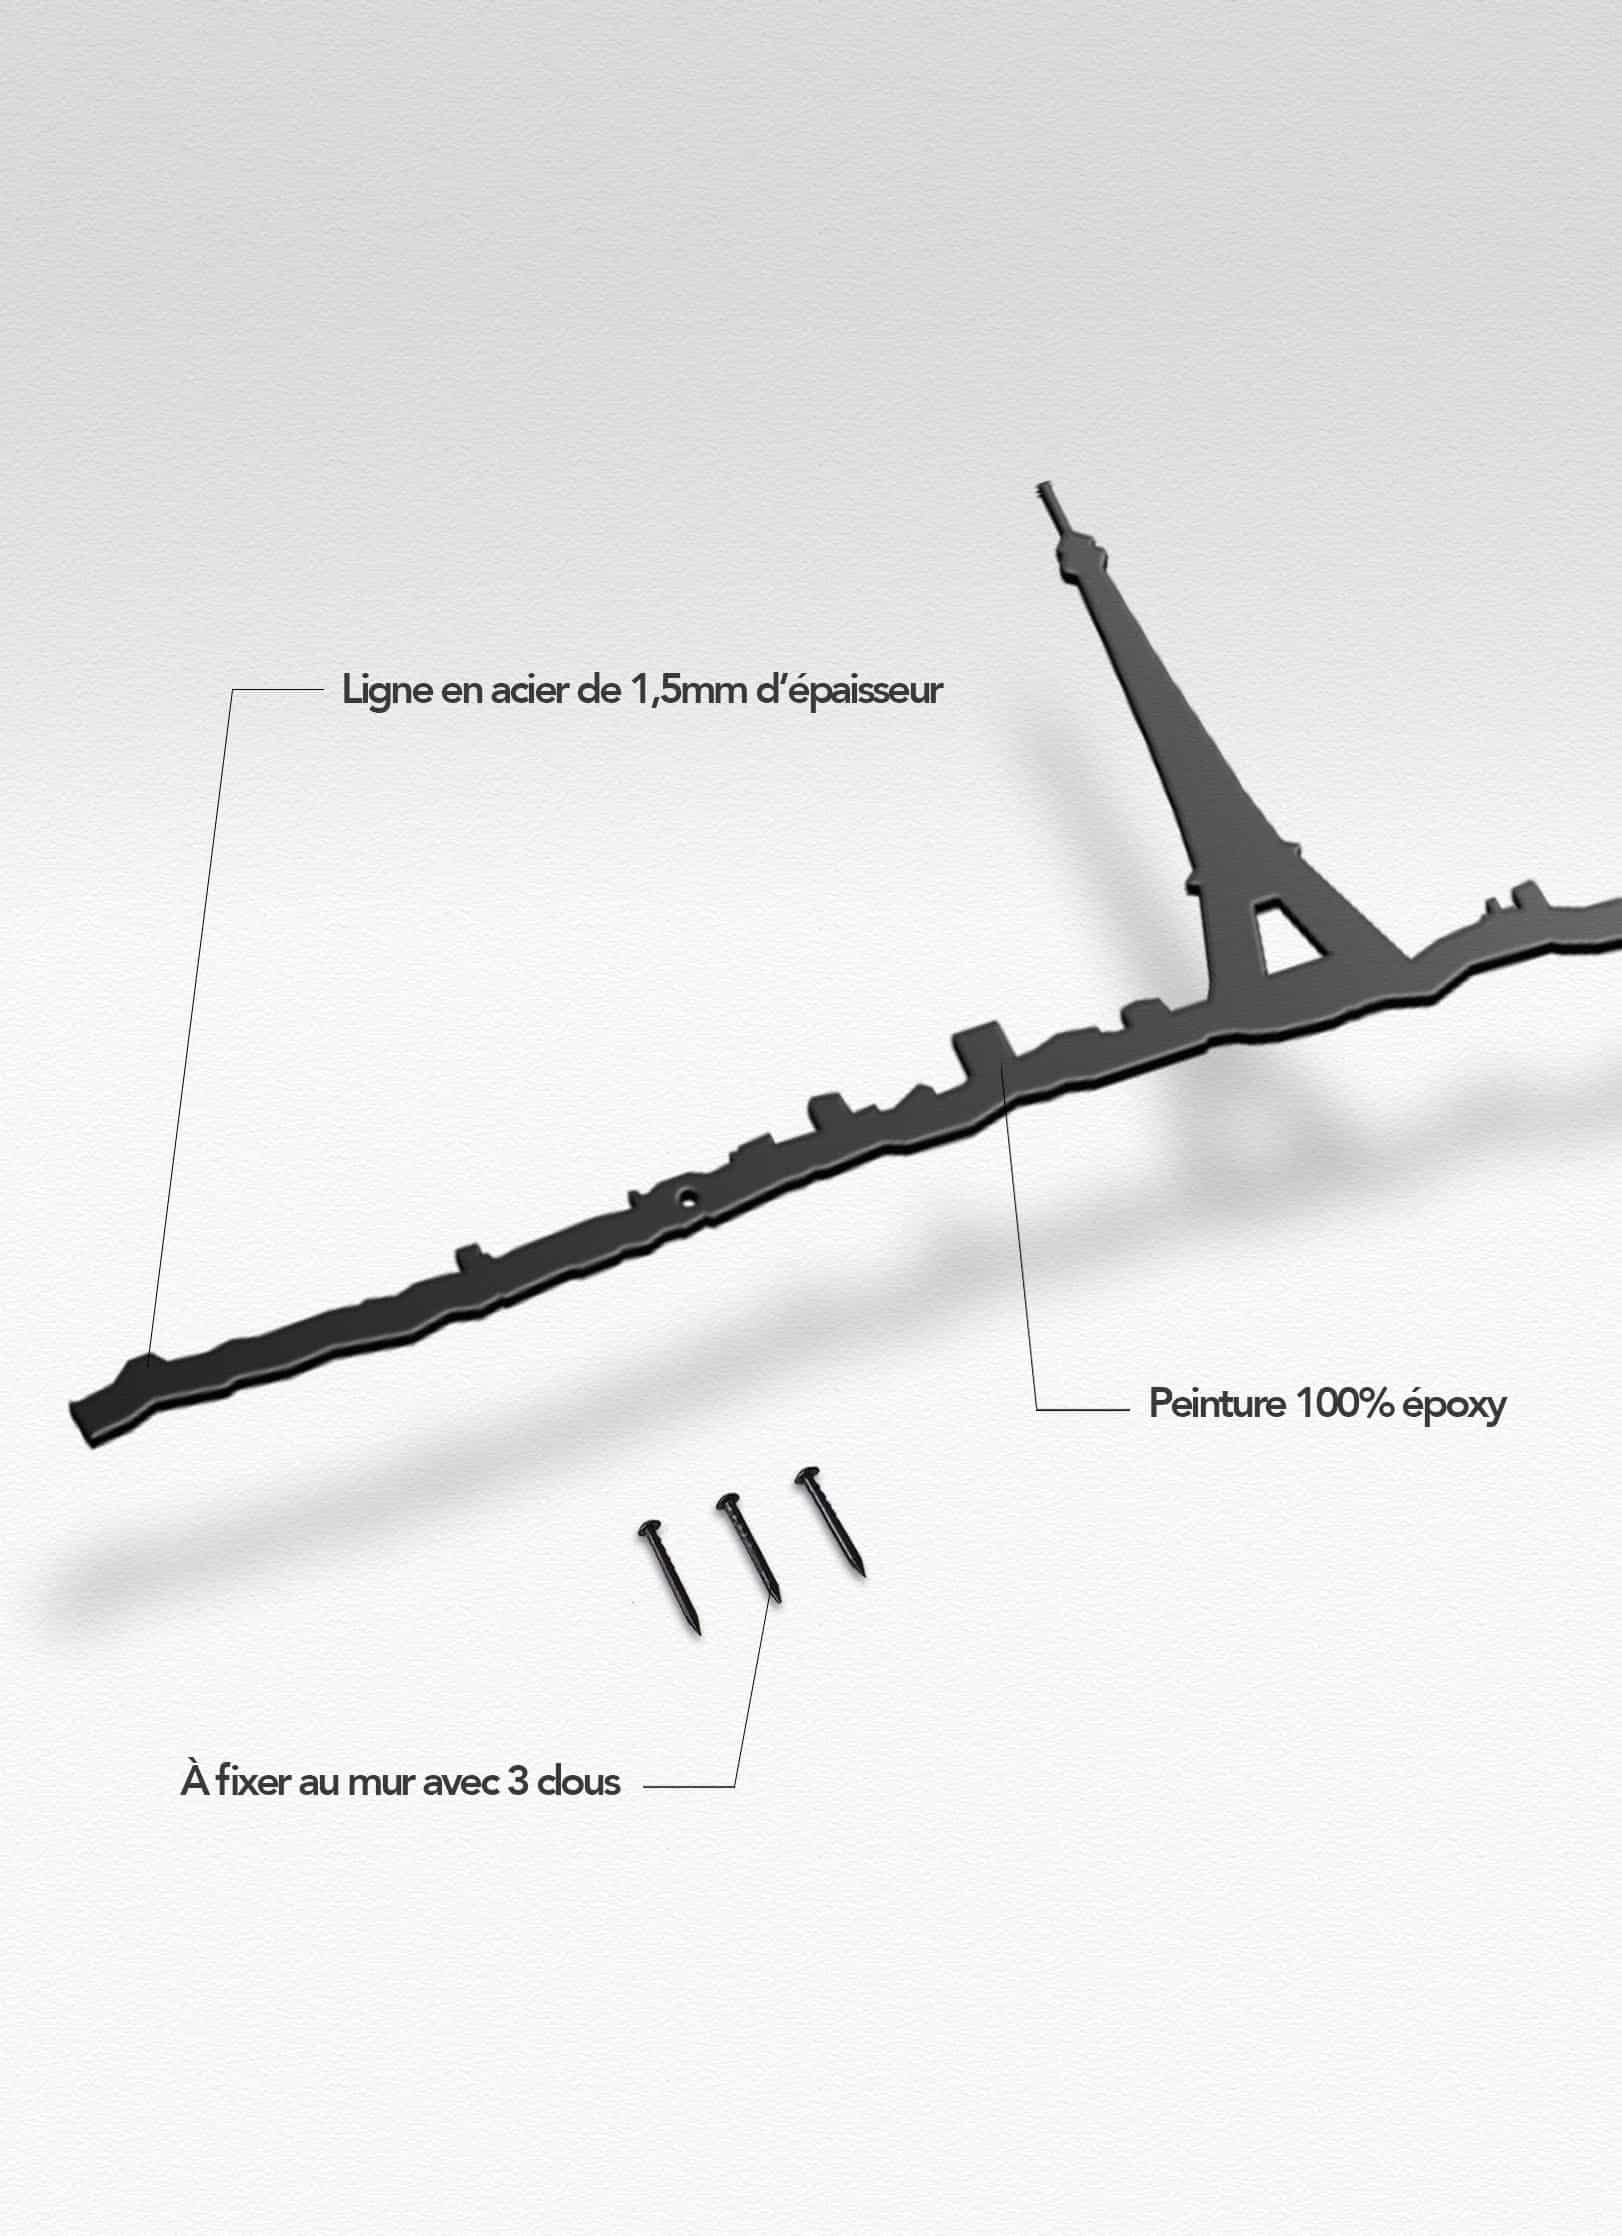 Presentation of the skyline of Paris